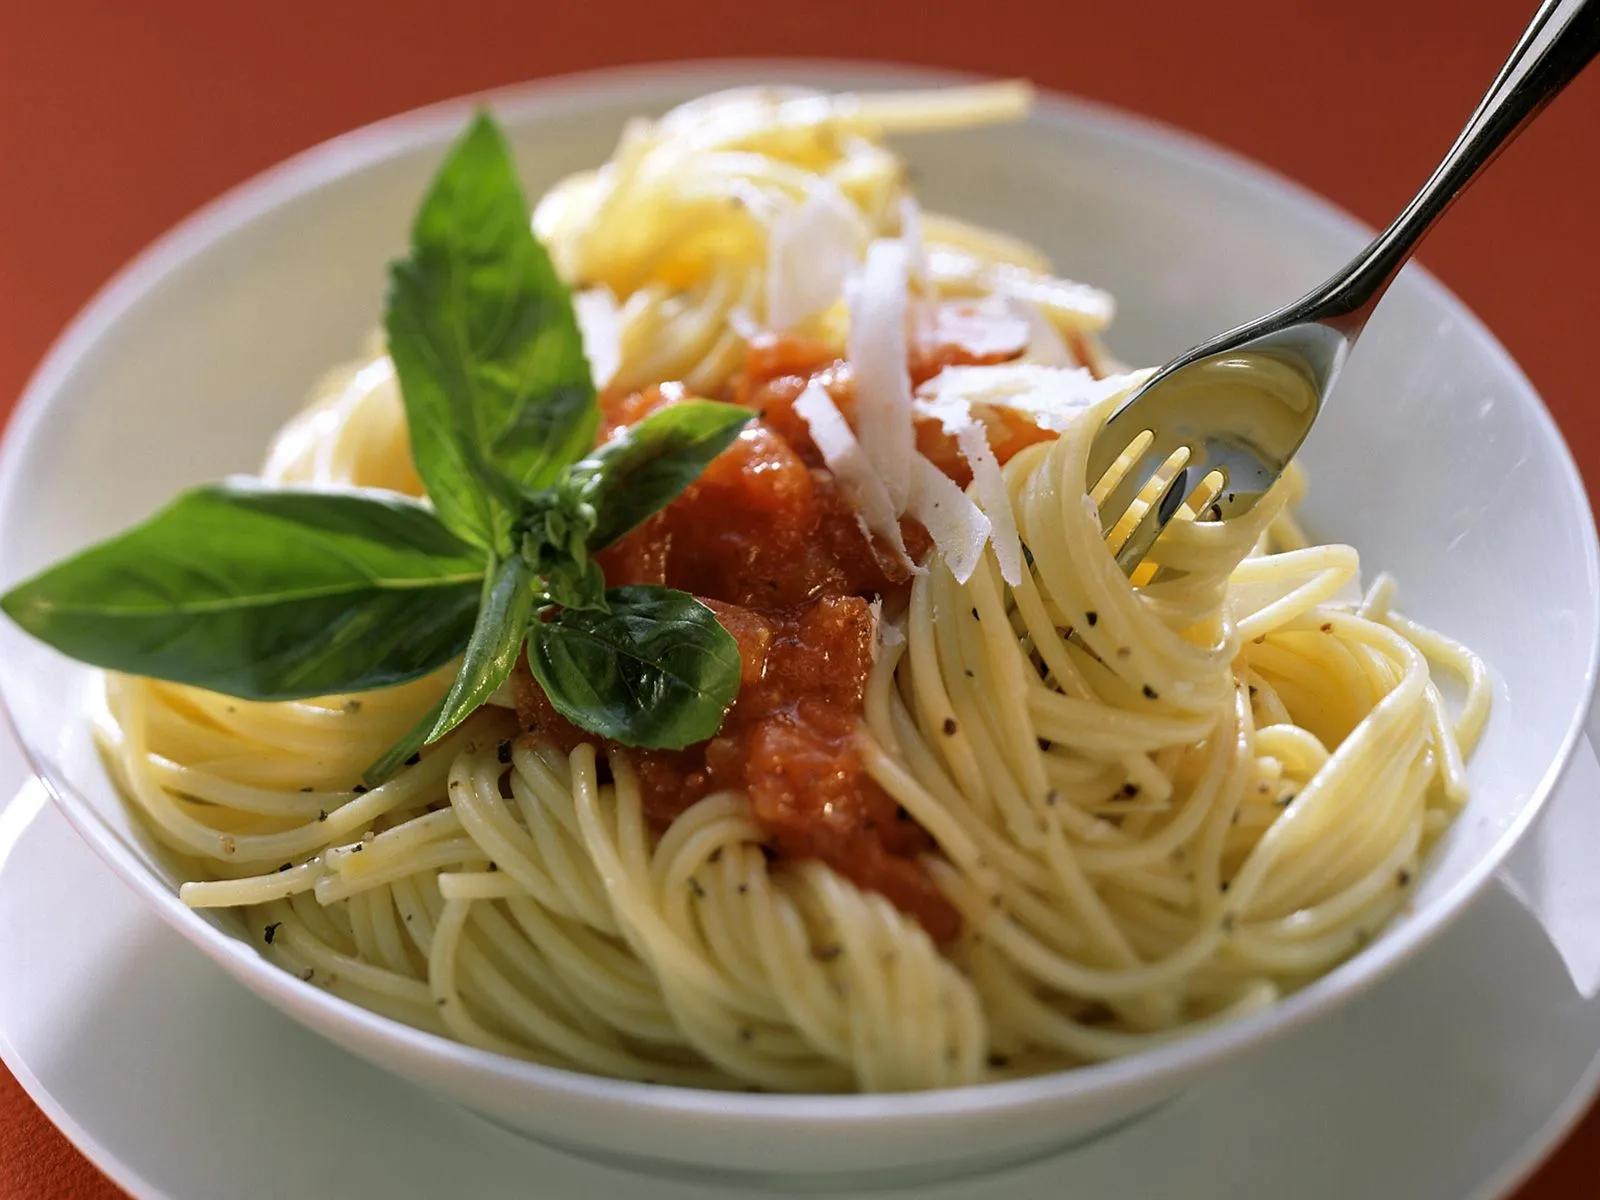 Nudeln mit Tomatensauce, Parmesan und Basilikum Rezept | EAT SMARTER